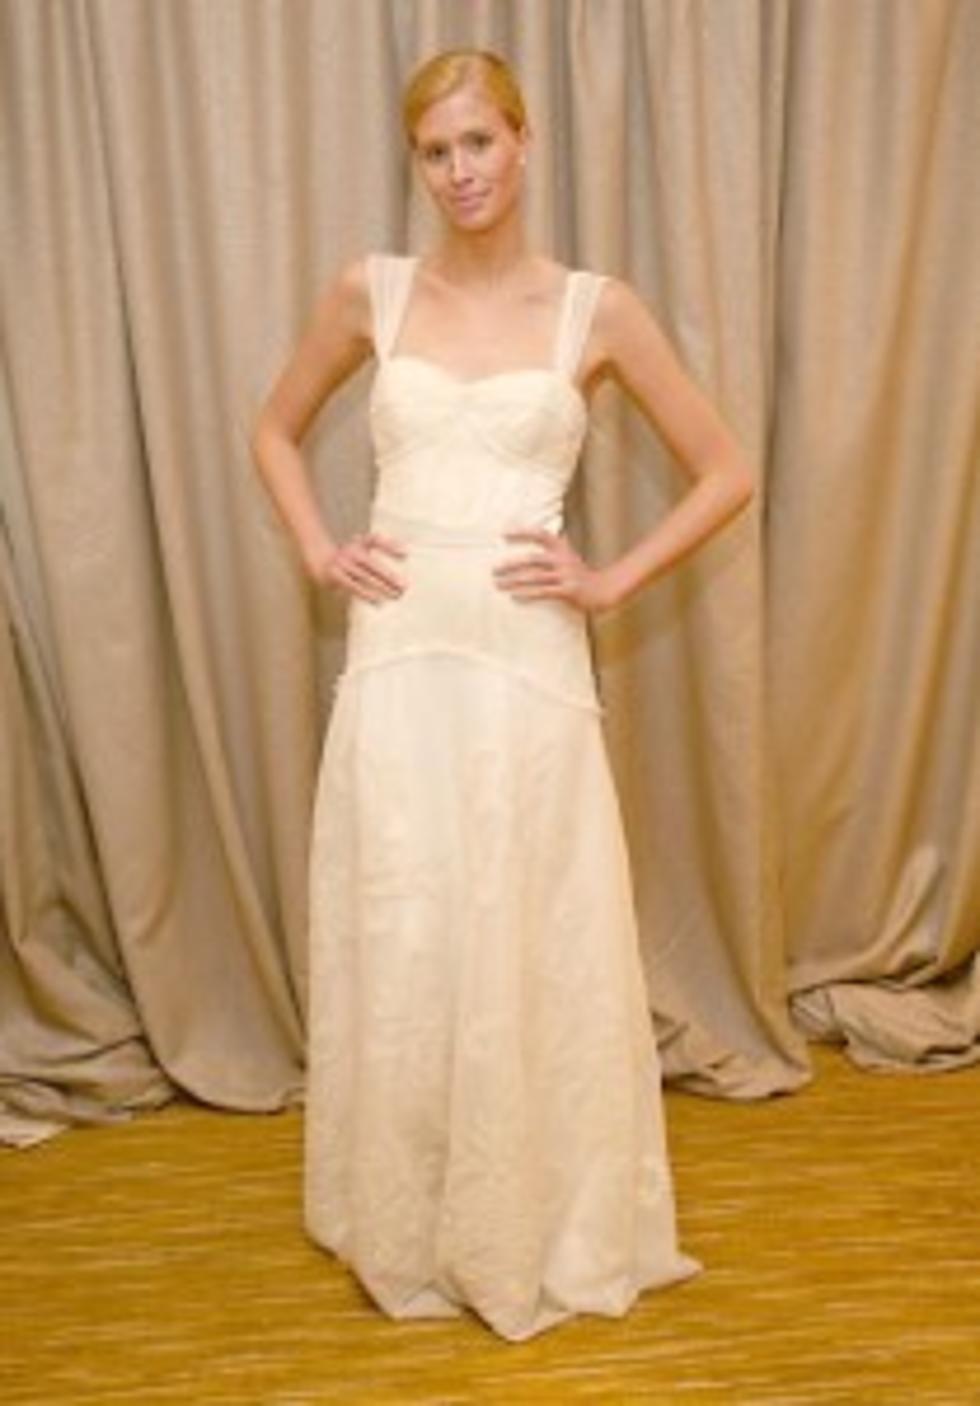 Costco Will Sell Designer Wedding Dresses